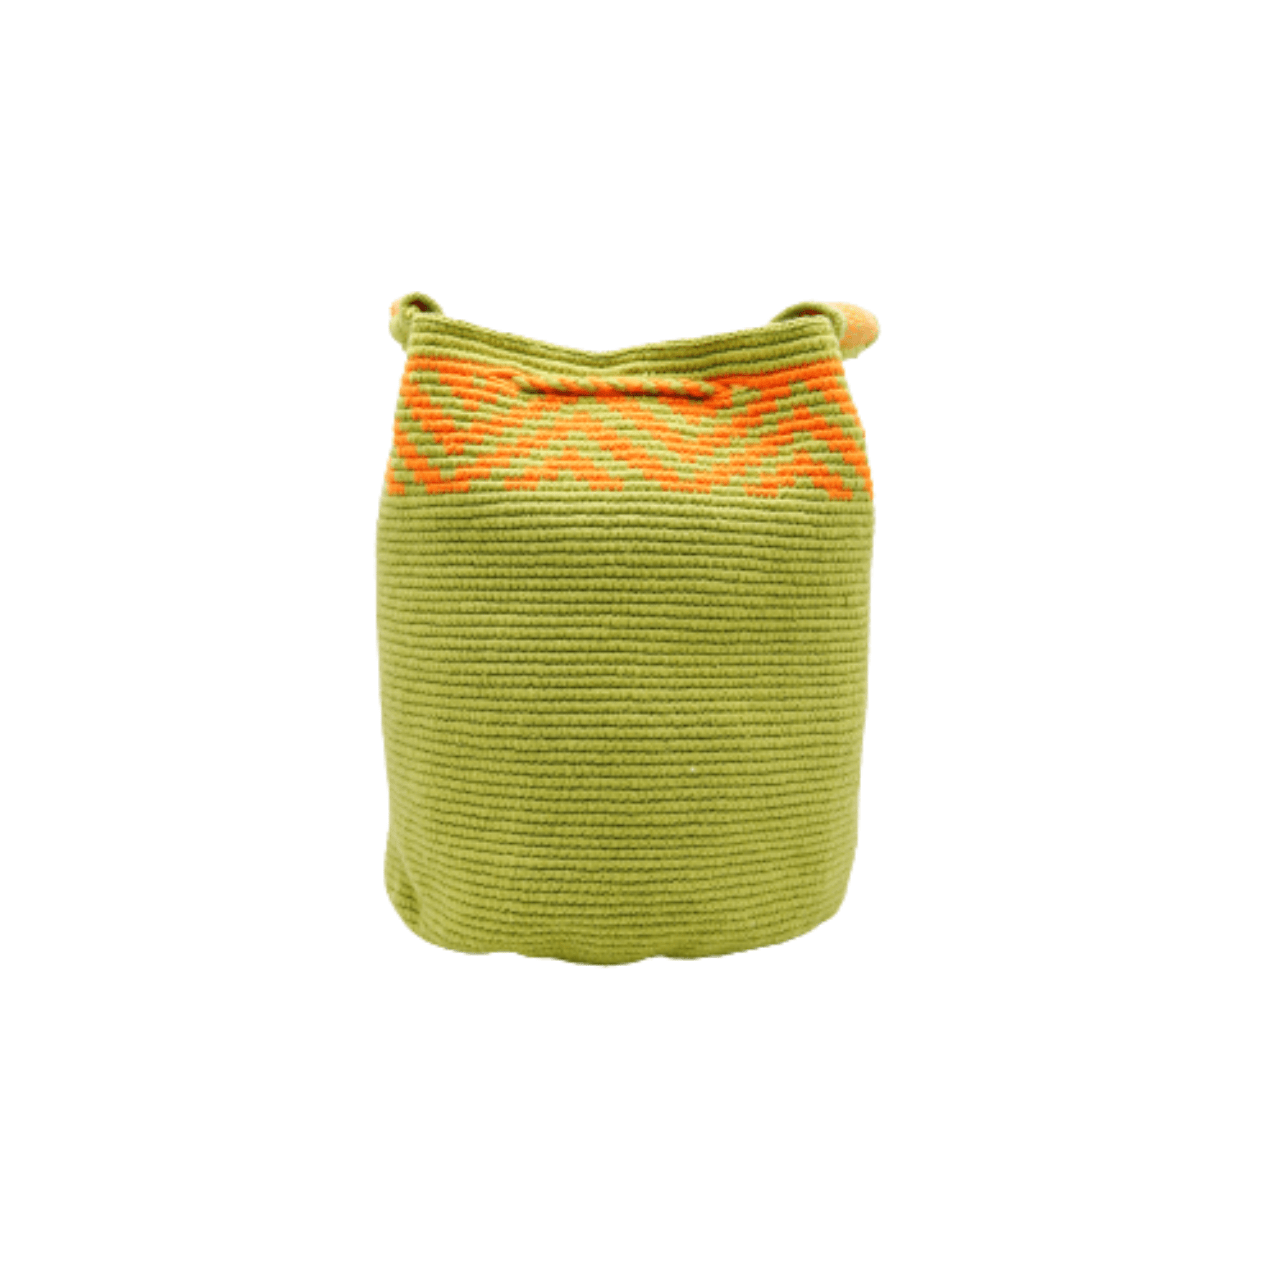 Caro Wayuu mochila bag in stunning apple green with vibrant orange accents.